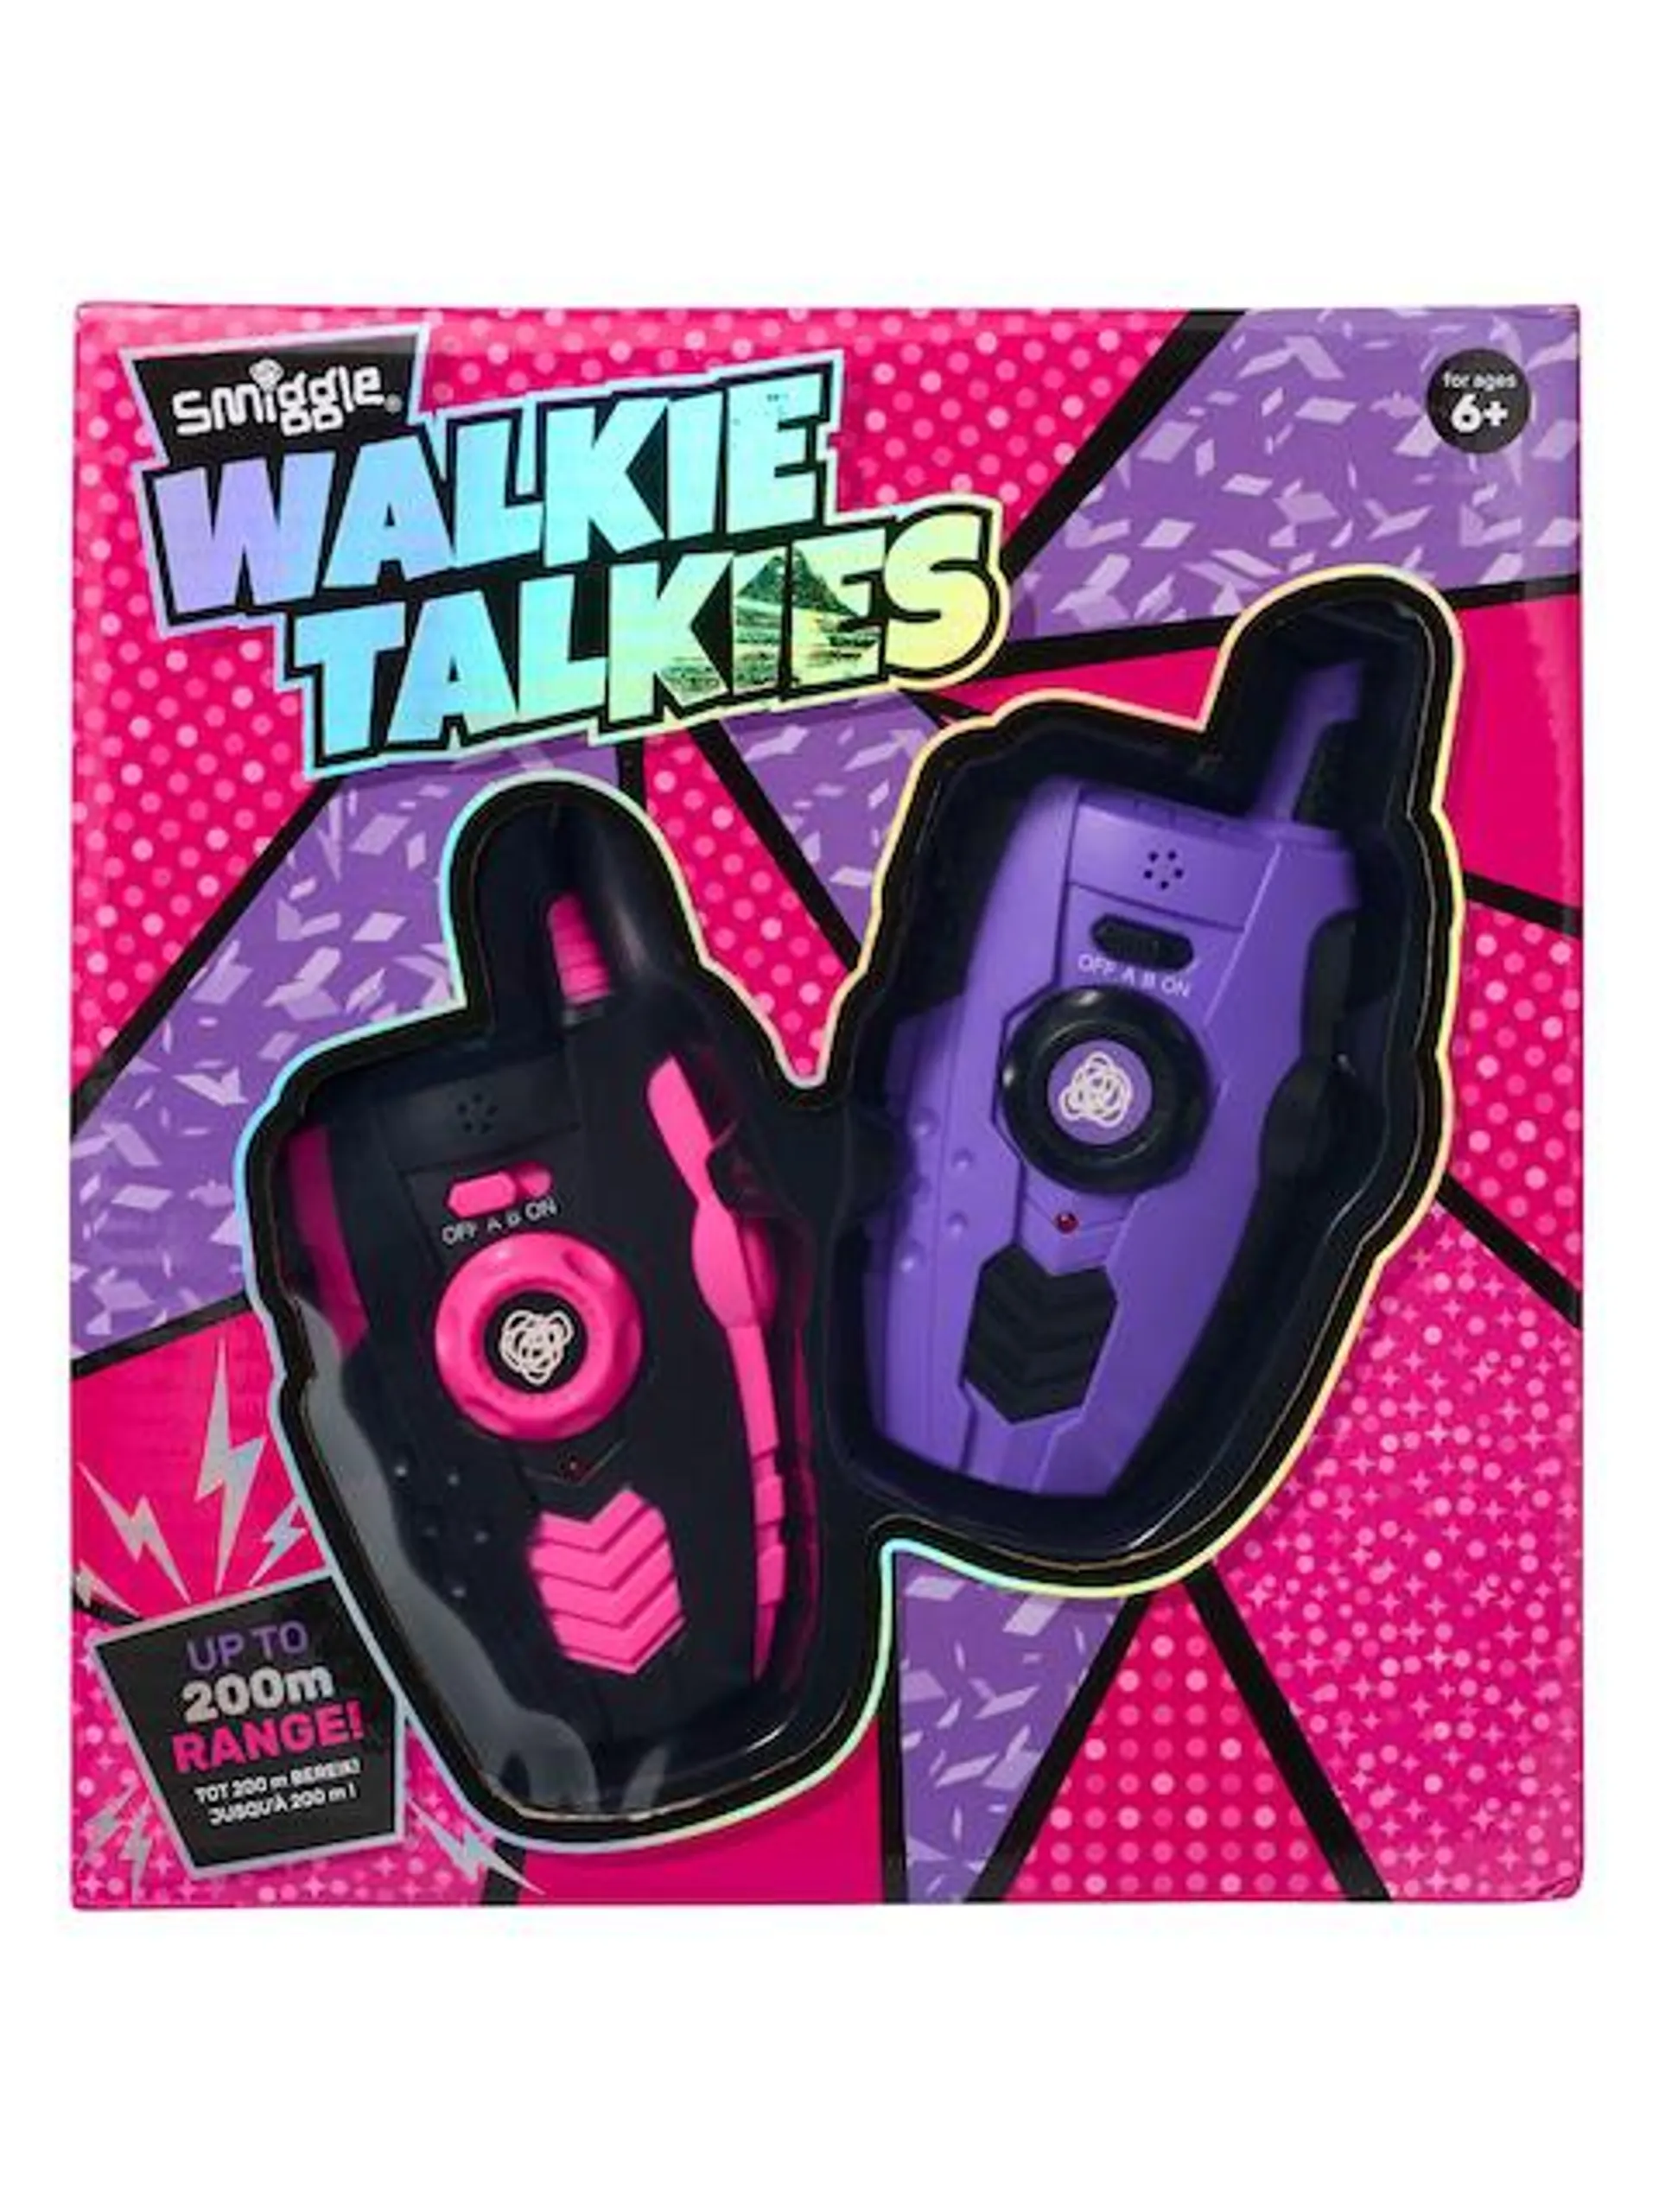 Spy Walkie Talkies